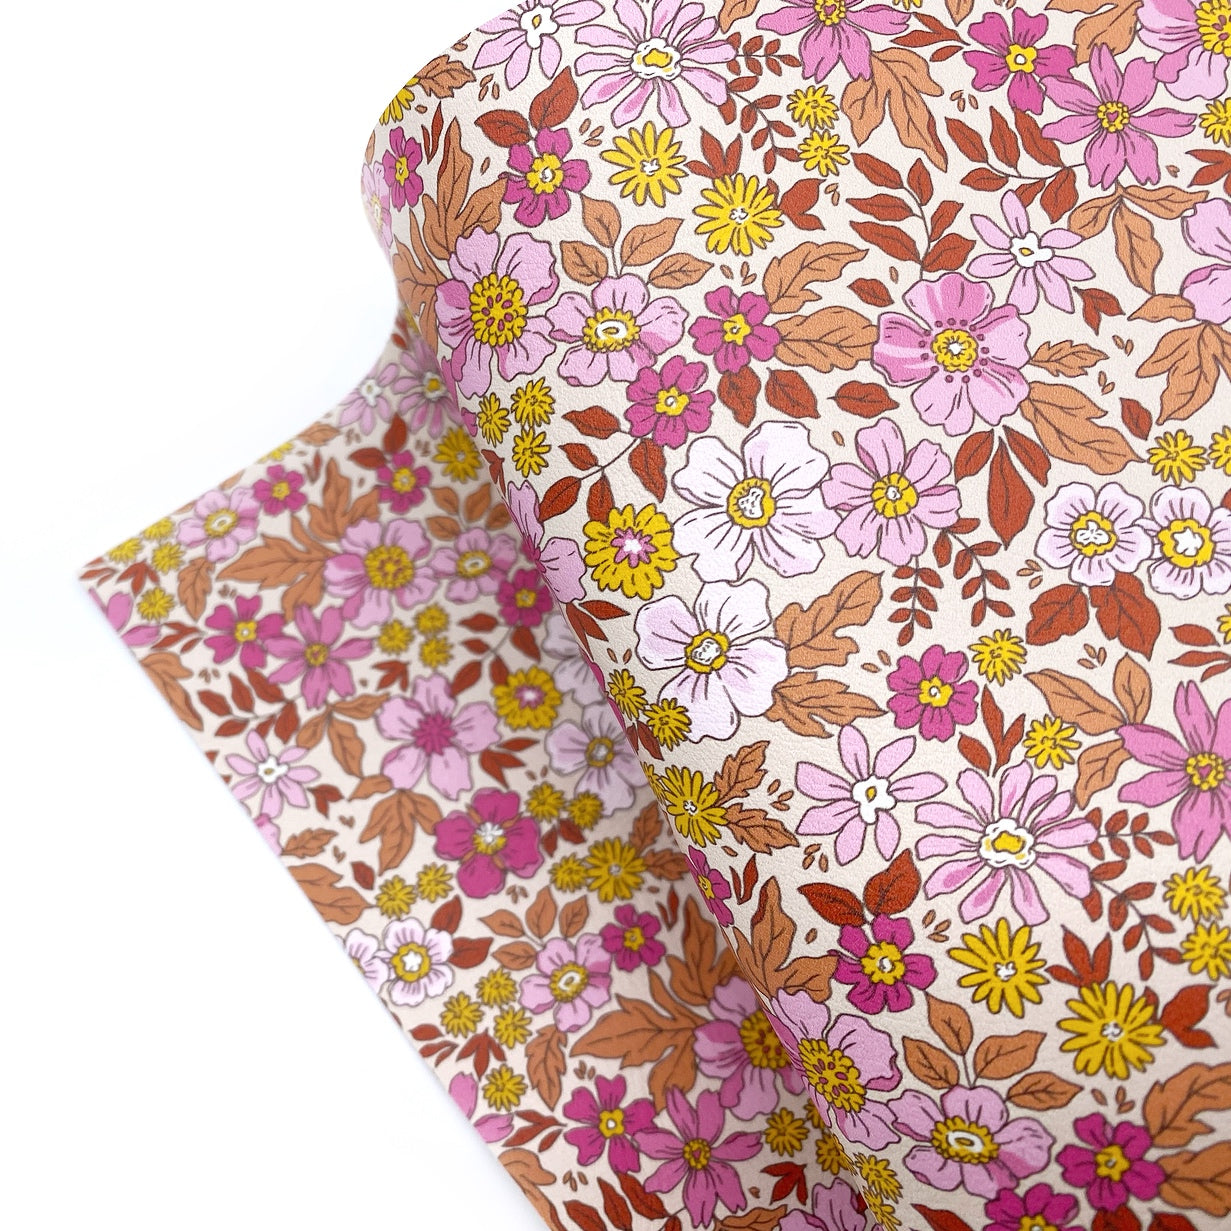 Wild Autumn Florals Premium Faux Leather Fabric Sheets